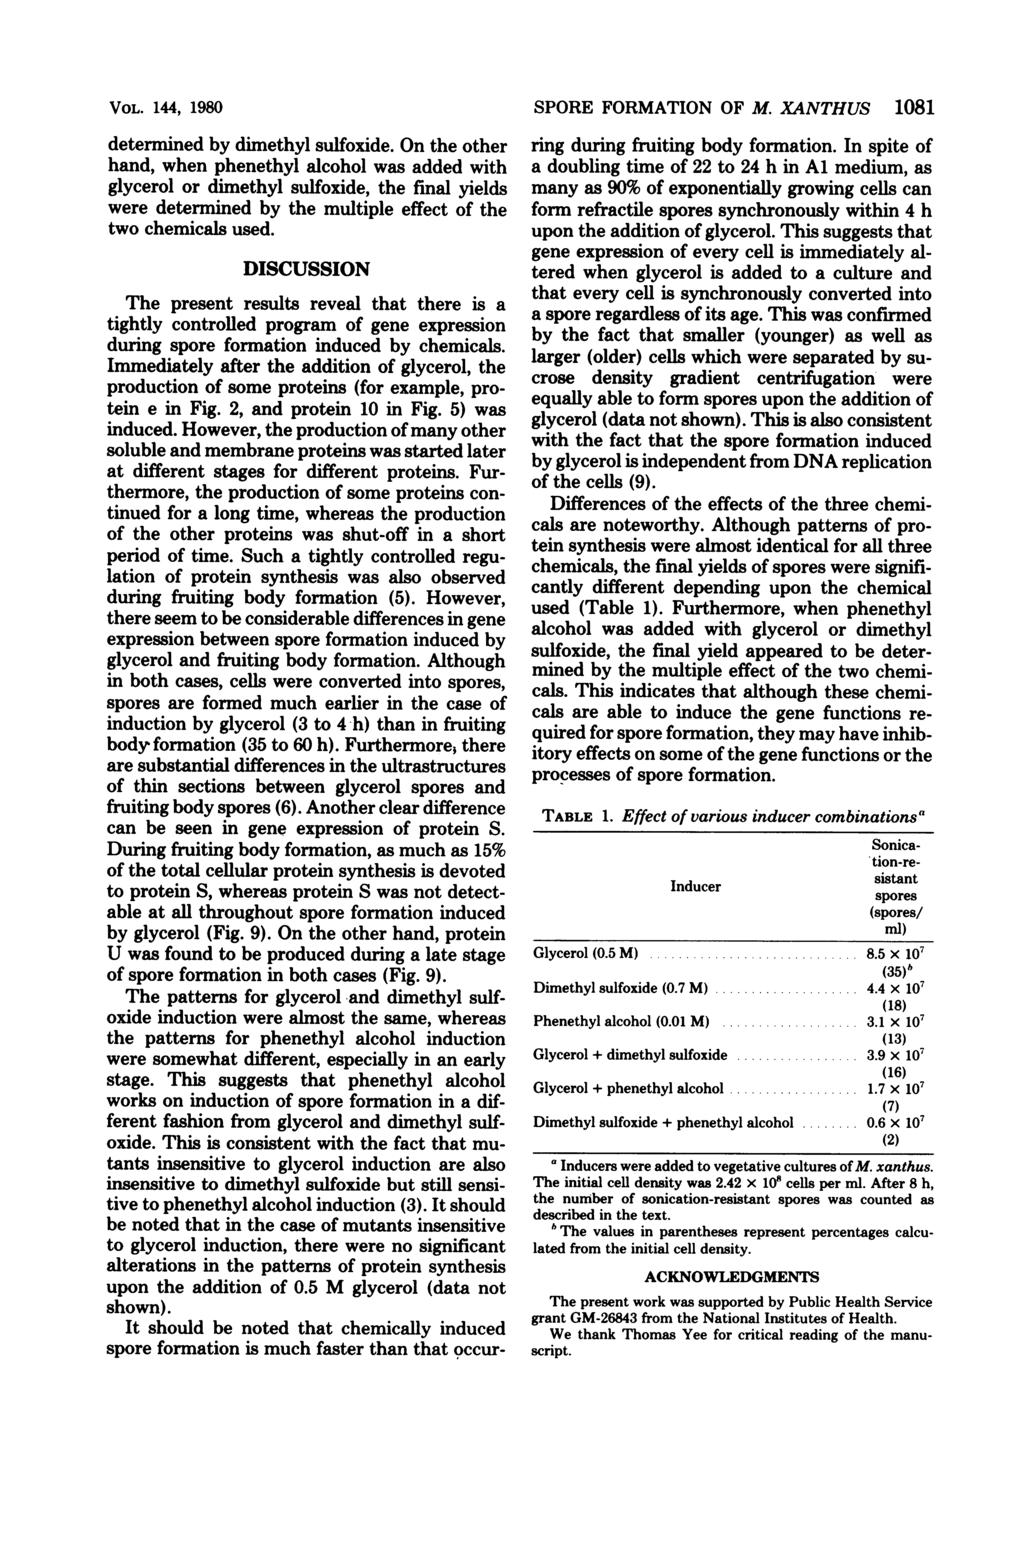 VOL. 144, 1980 determined by dimethyl sulfoxide.